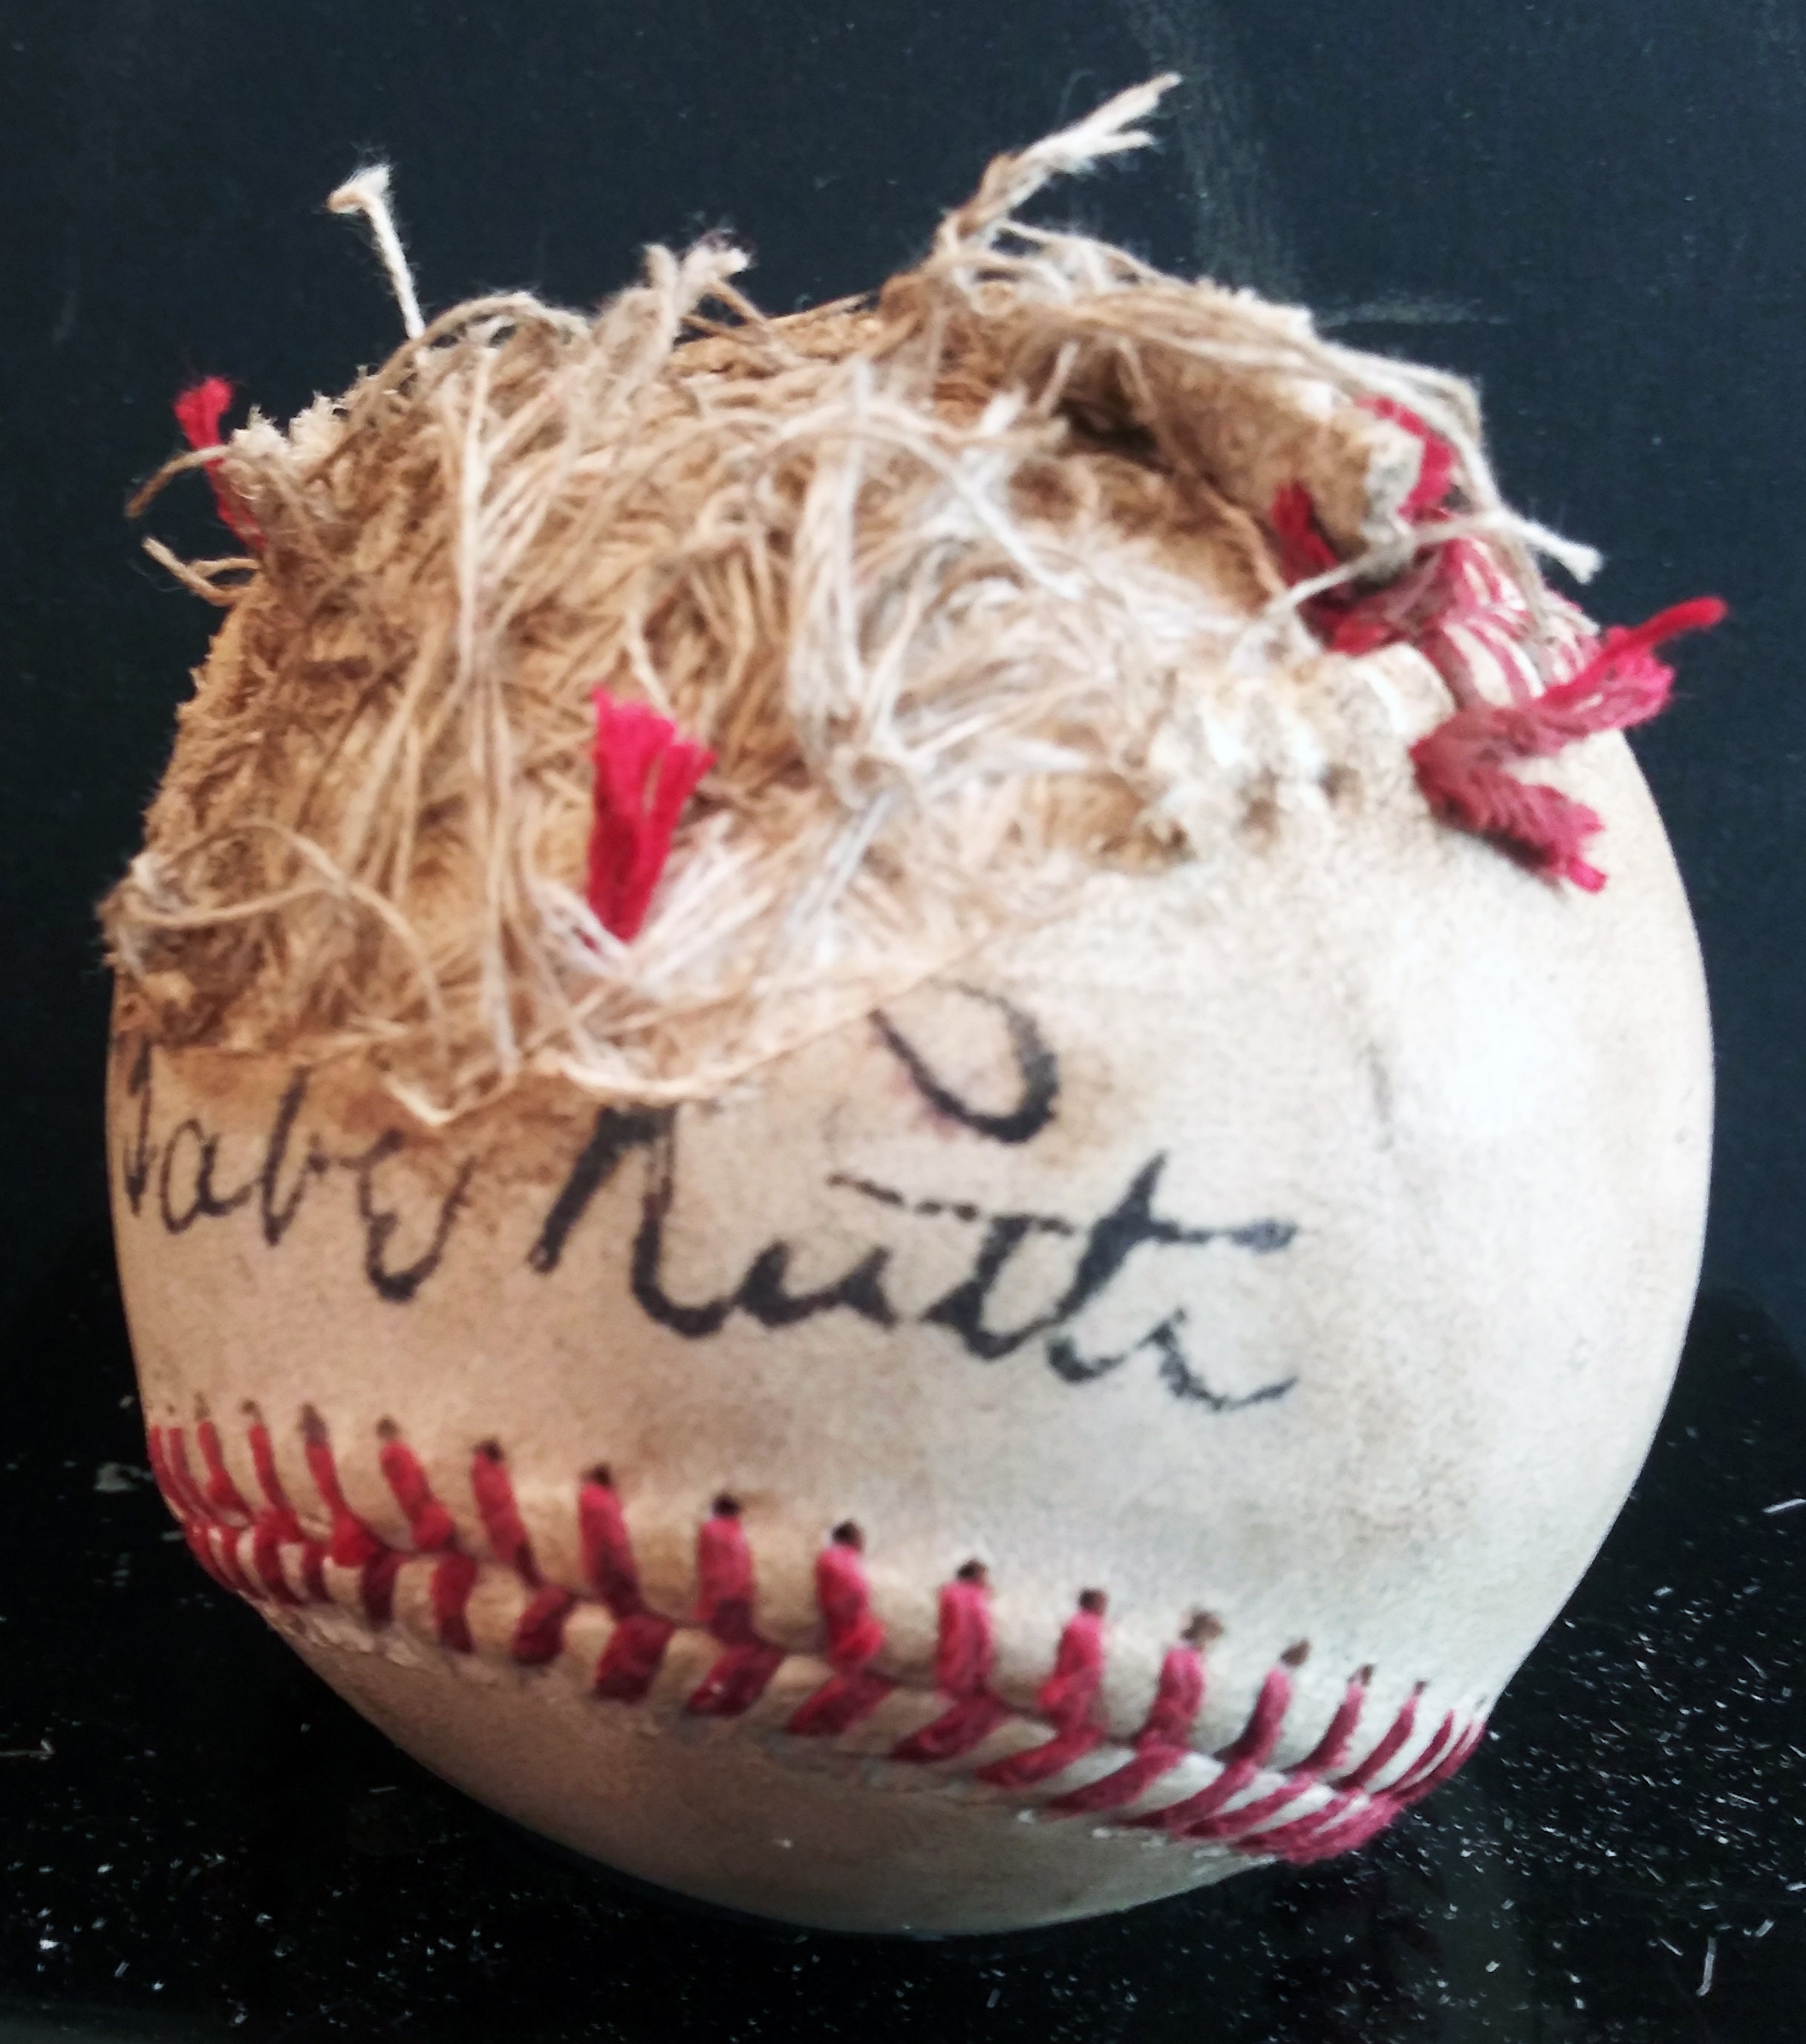 The Sandlot Babe Ruth Autographed 1930's Baseball. Replica Souvenir Ball